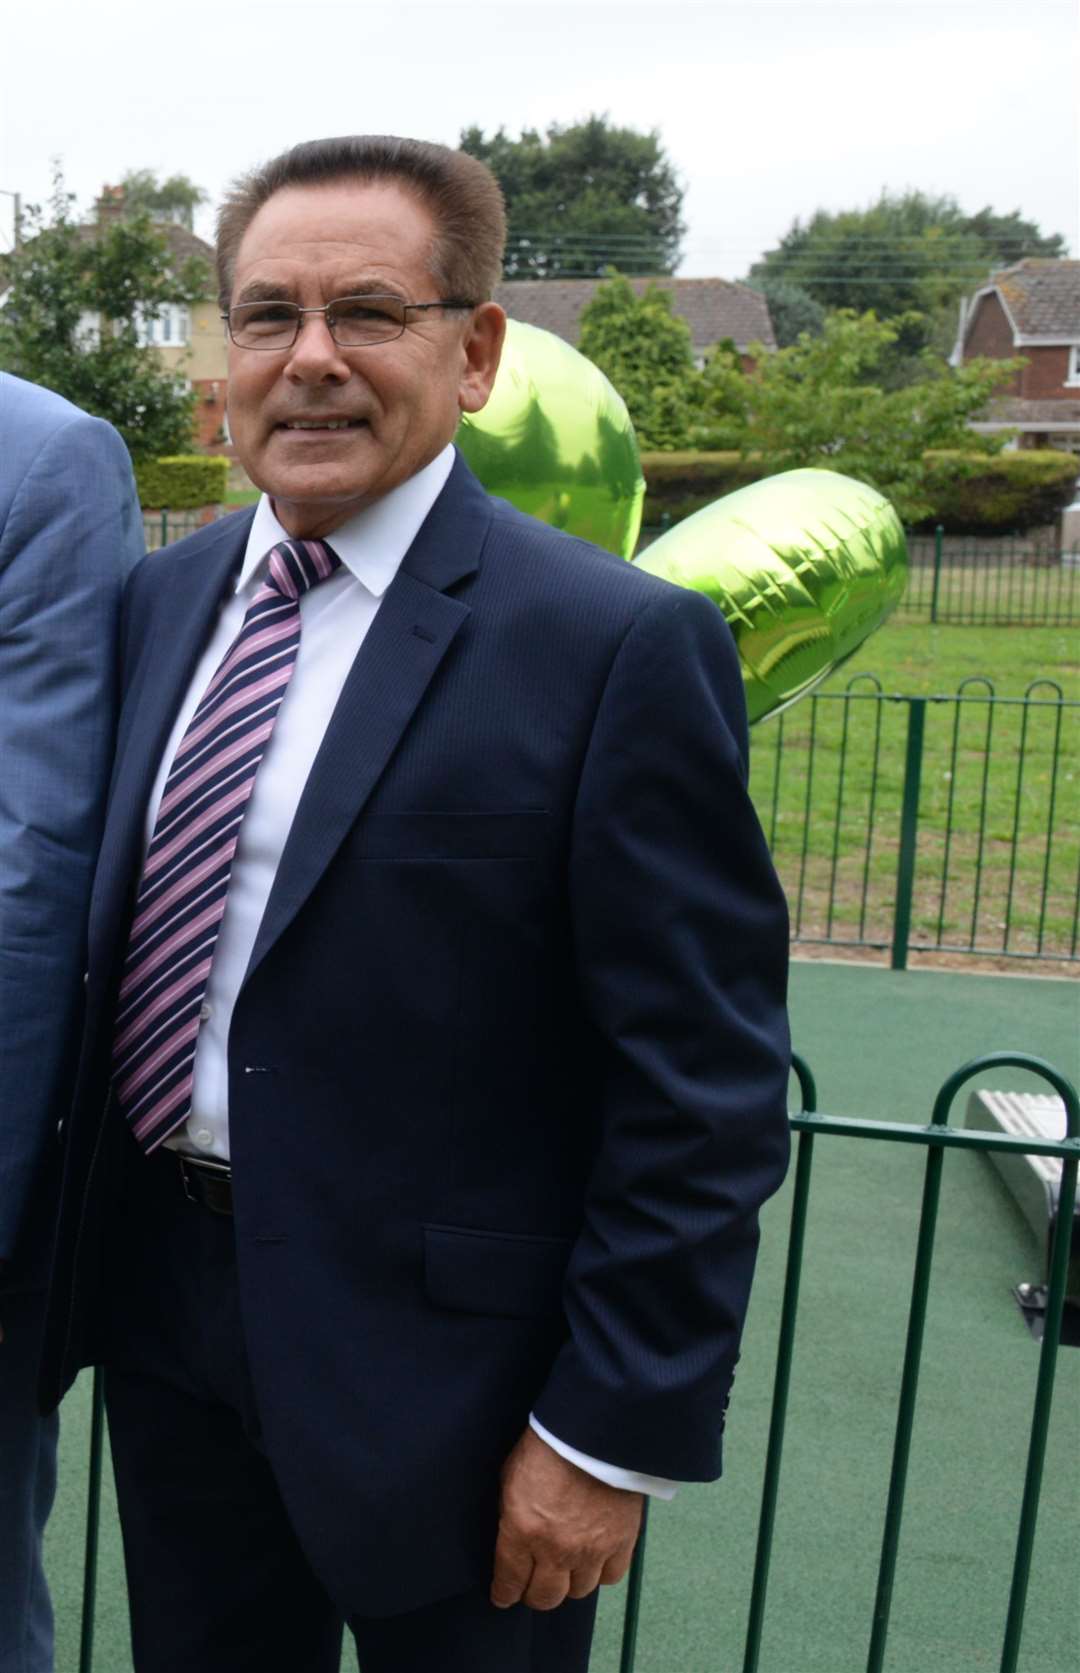 Bob Ulph, chairman of Leybourne Parish Council. Picture: Chris Davey